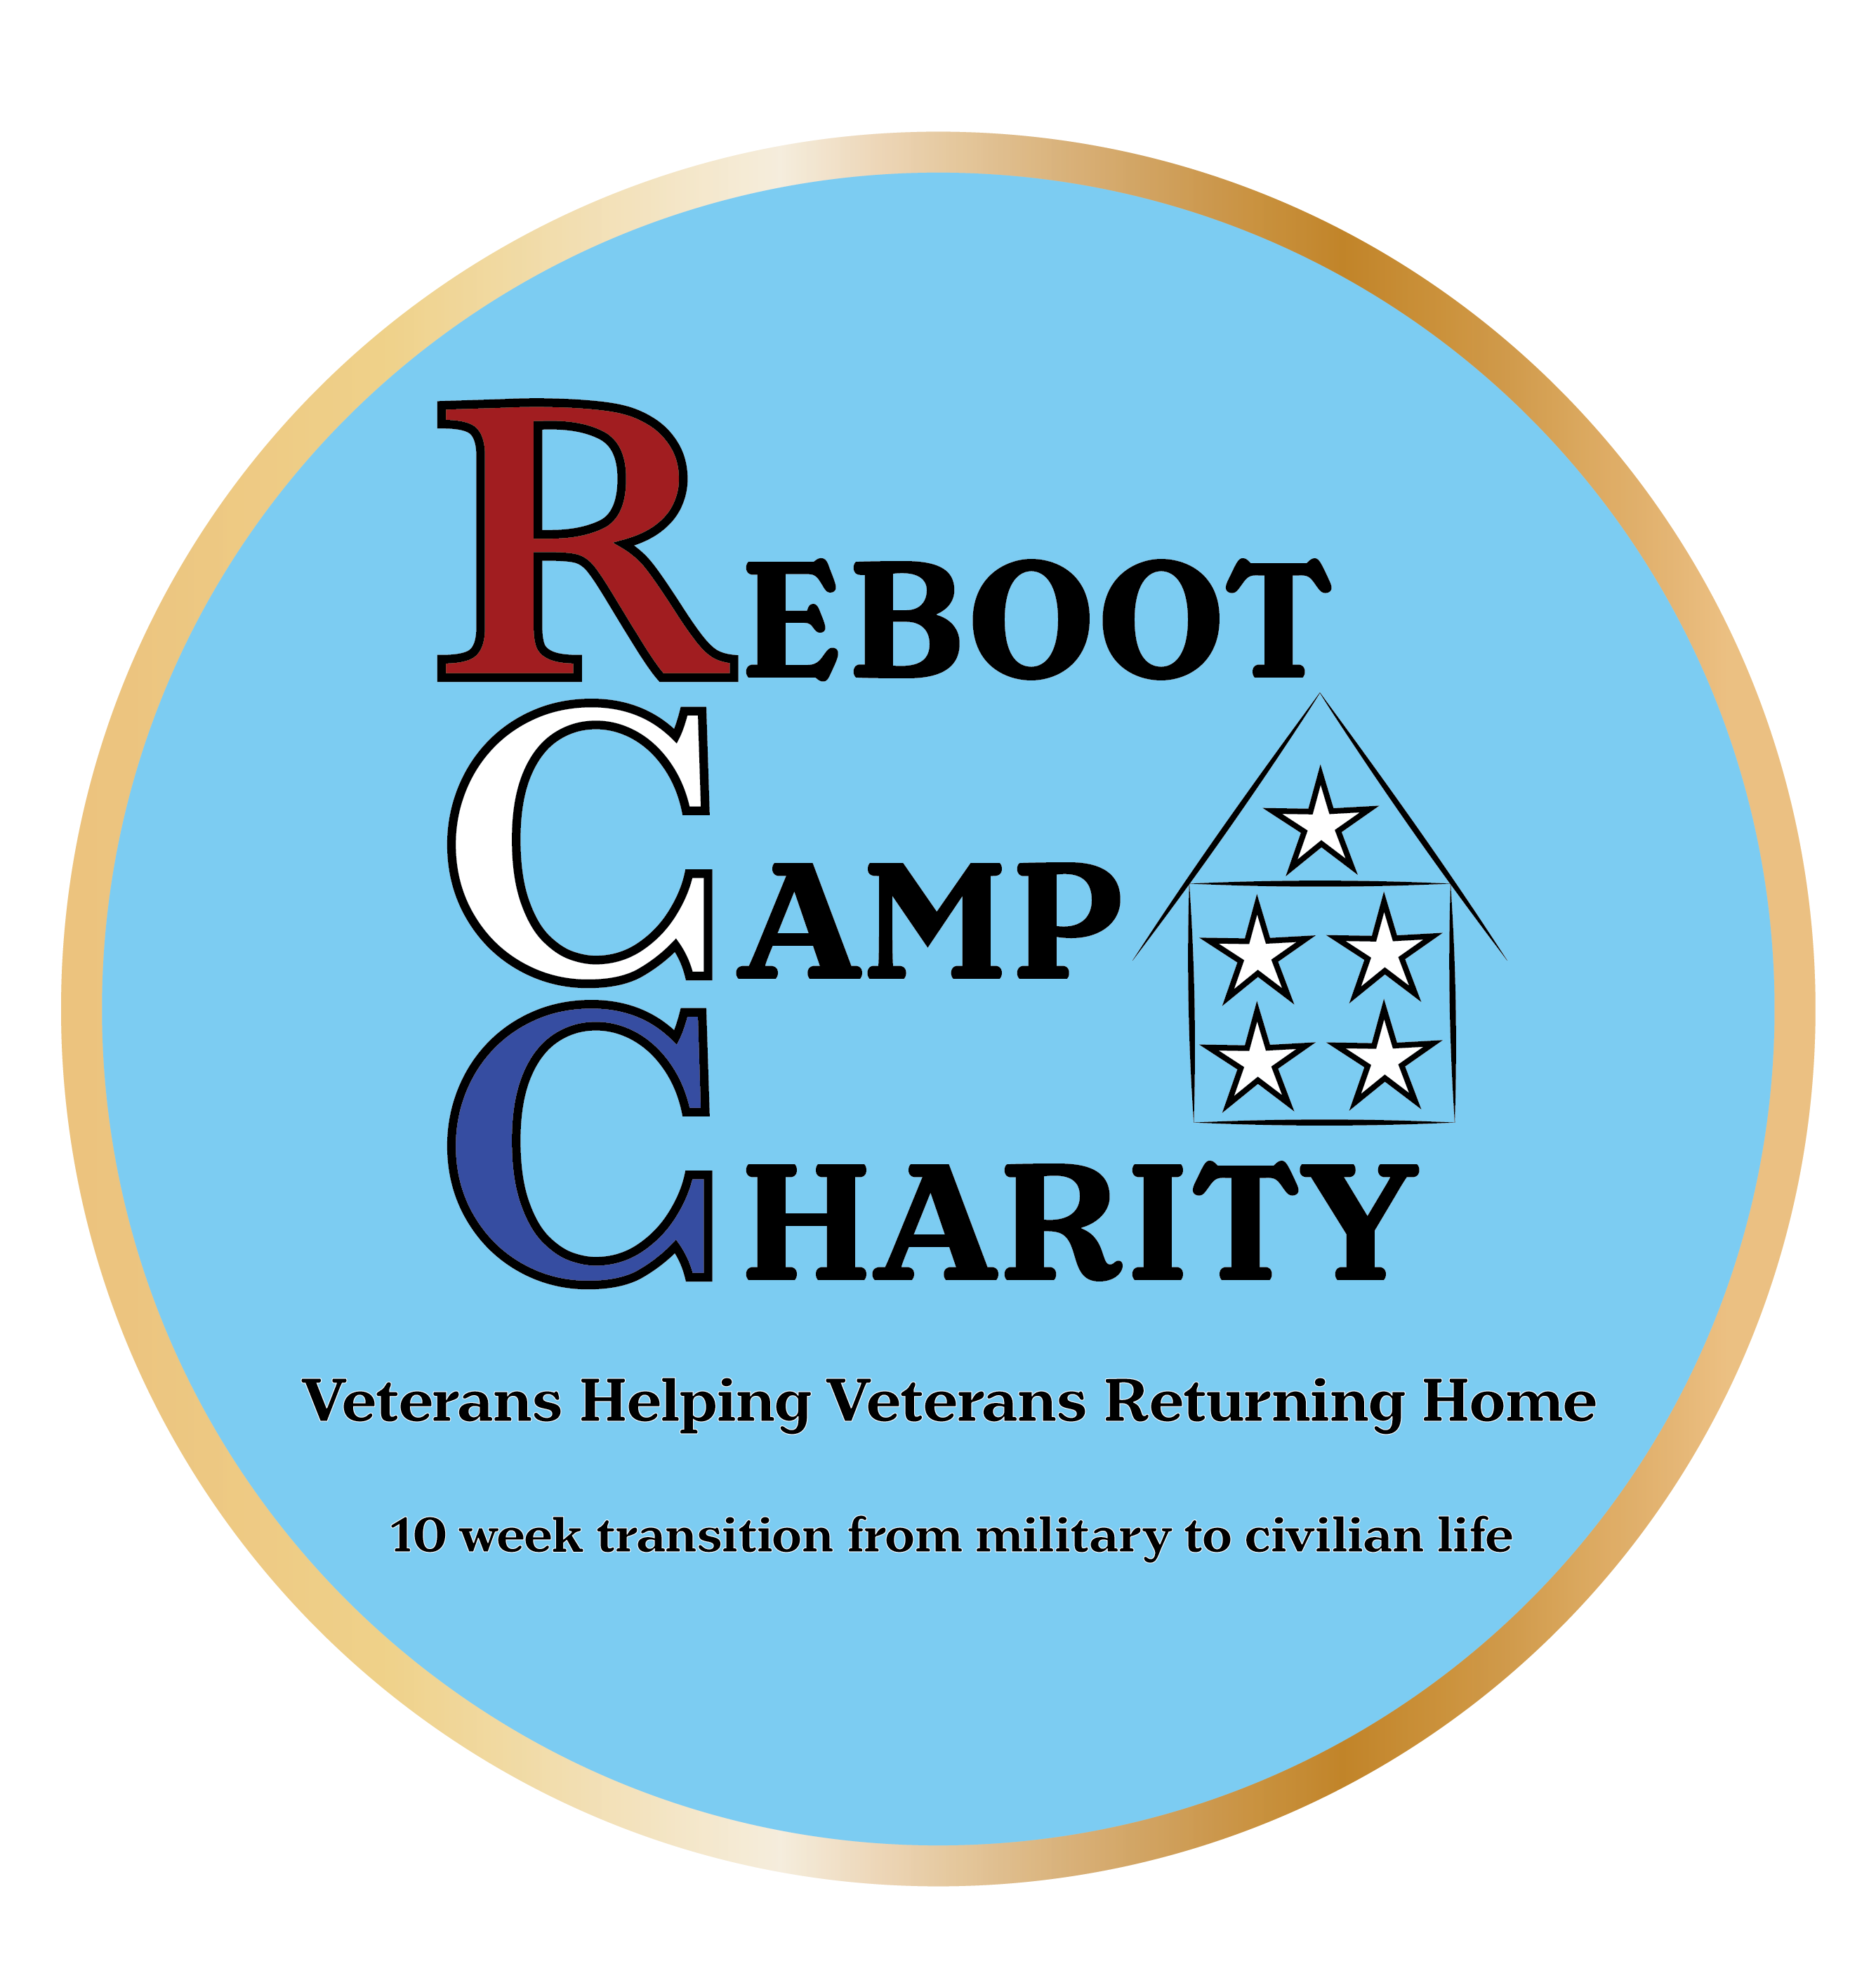 Reboot Camp Charity Logo